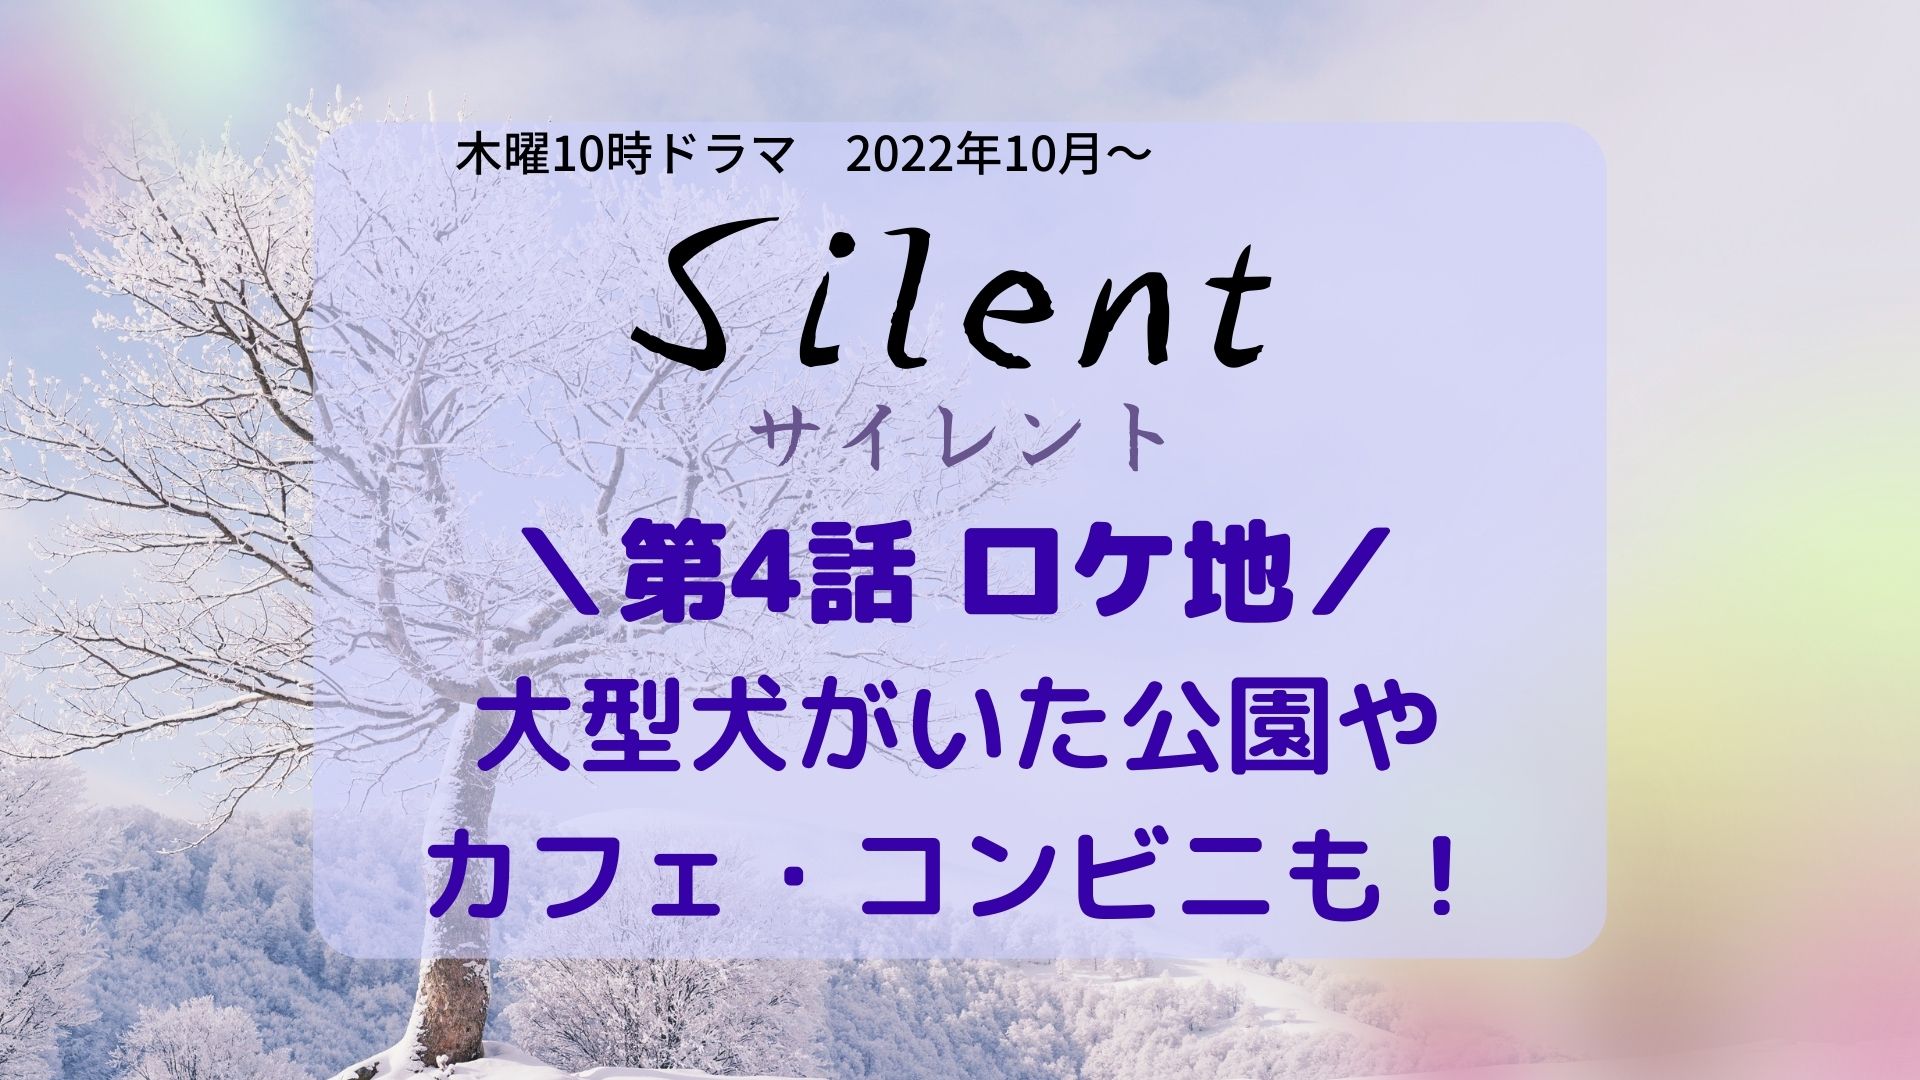 Silent (サイレント)4話ロケ地